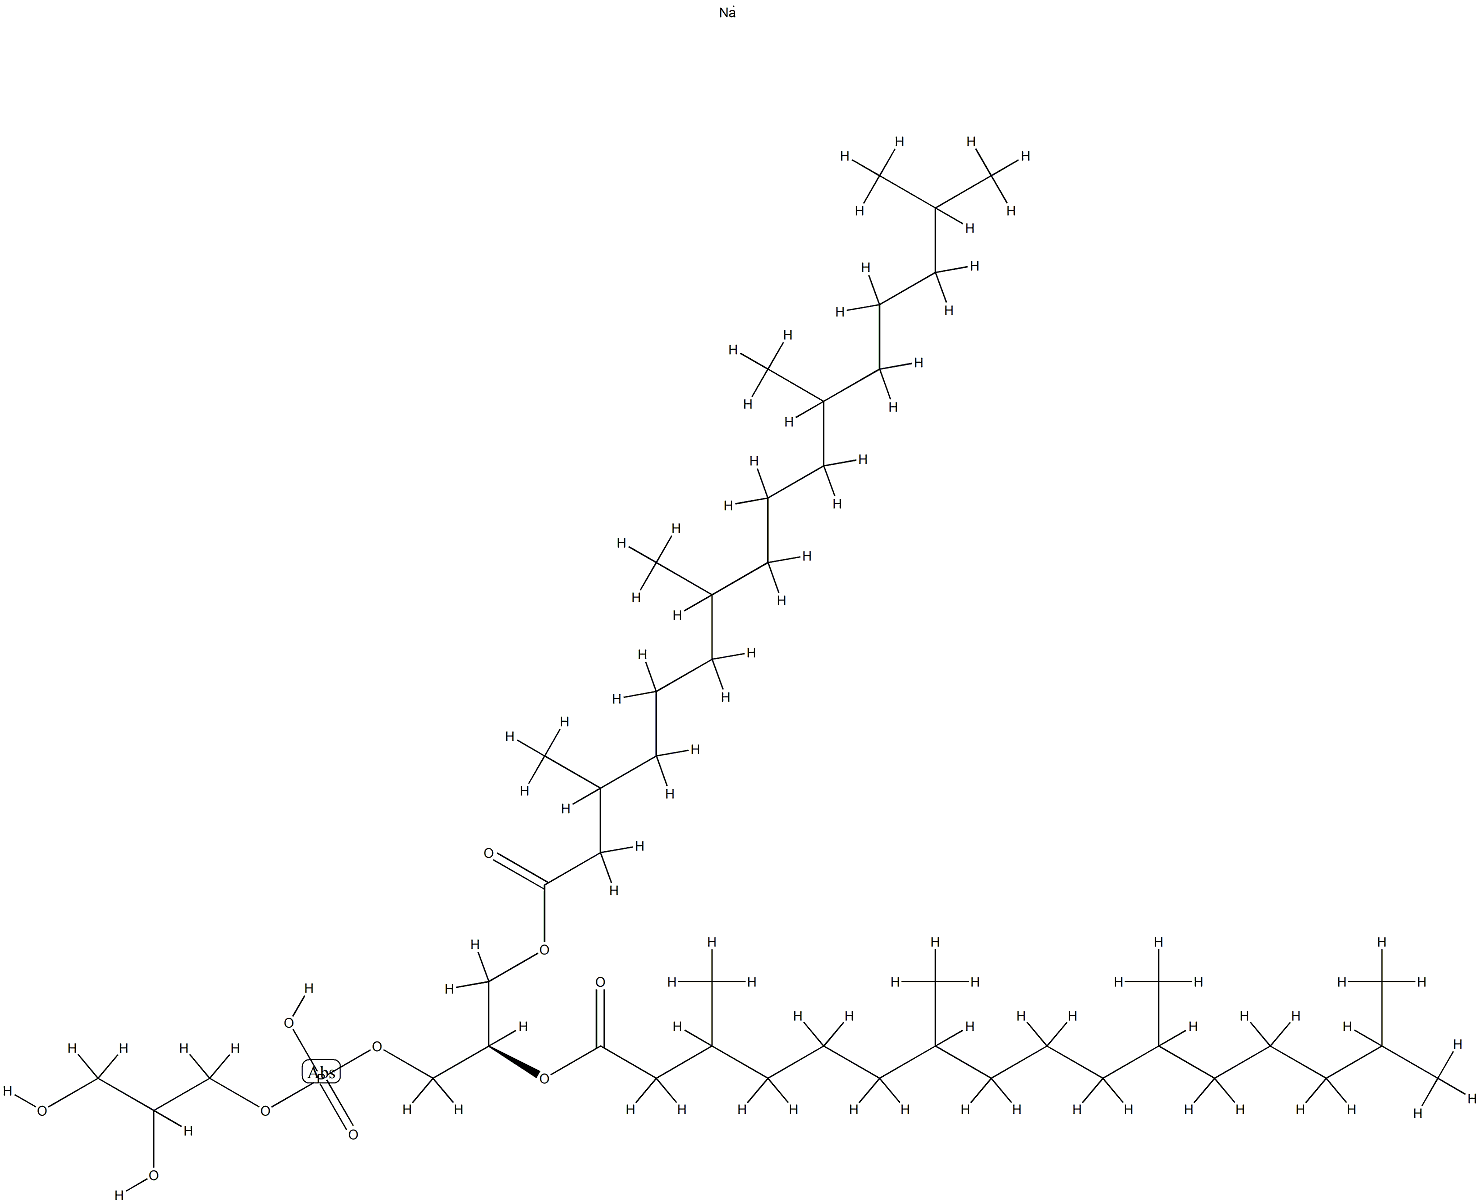 1,2-diphytanoyl-sn-glycero-3-phospho-(1'-rac-glycerol) (sodiuM salt) Structure